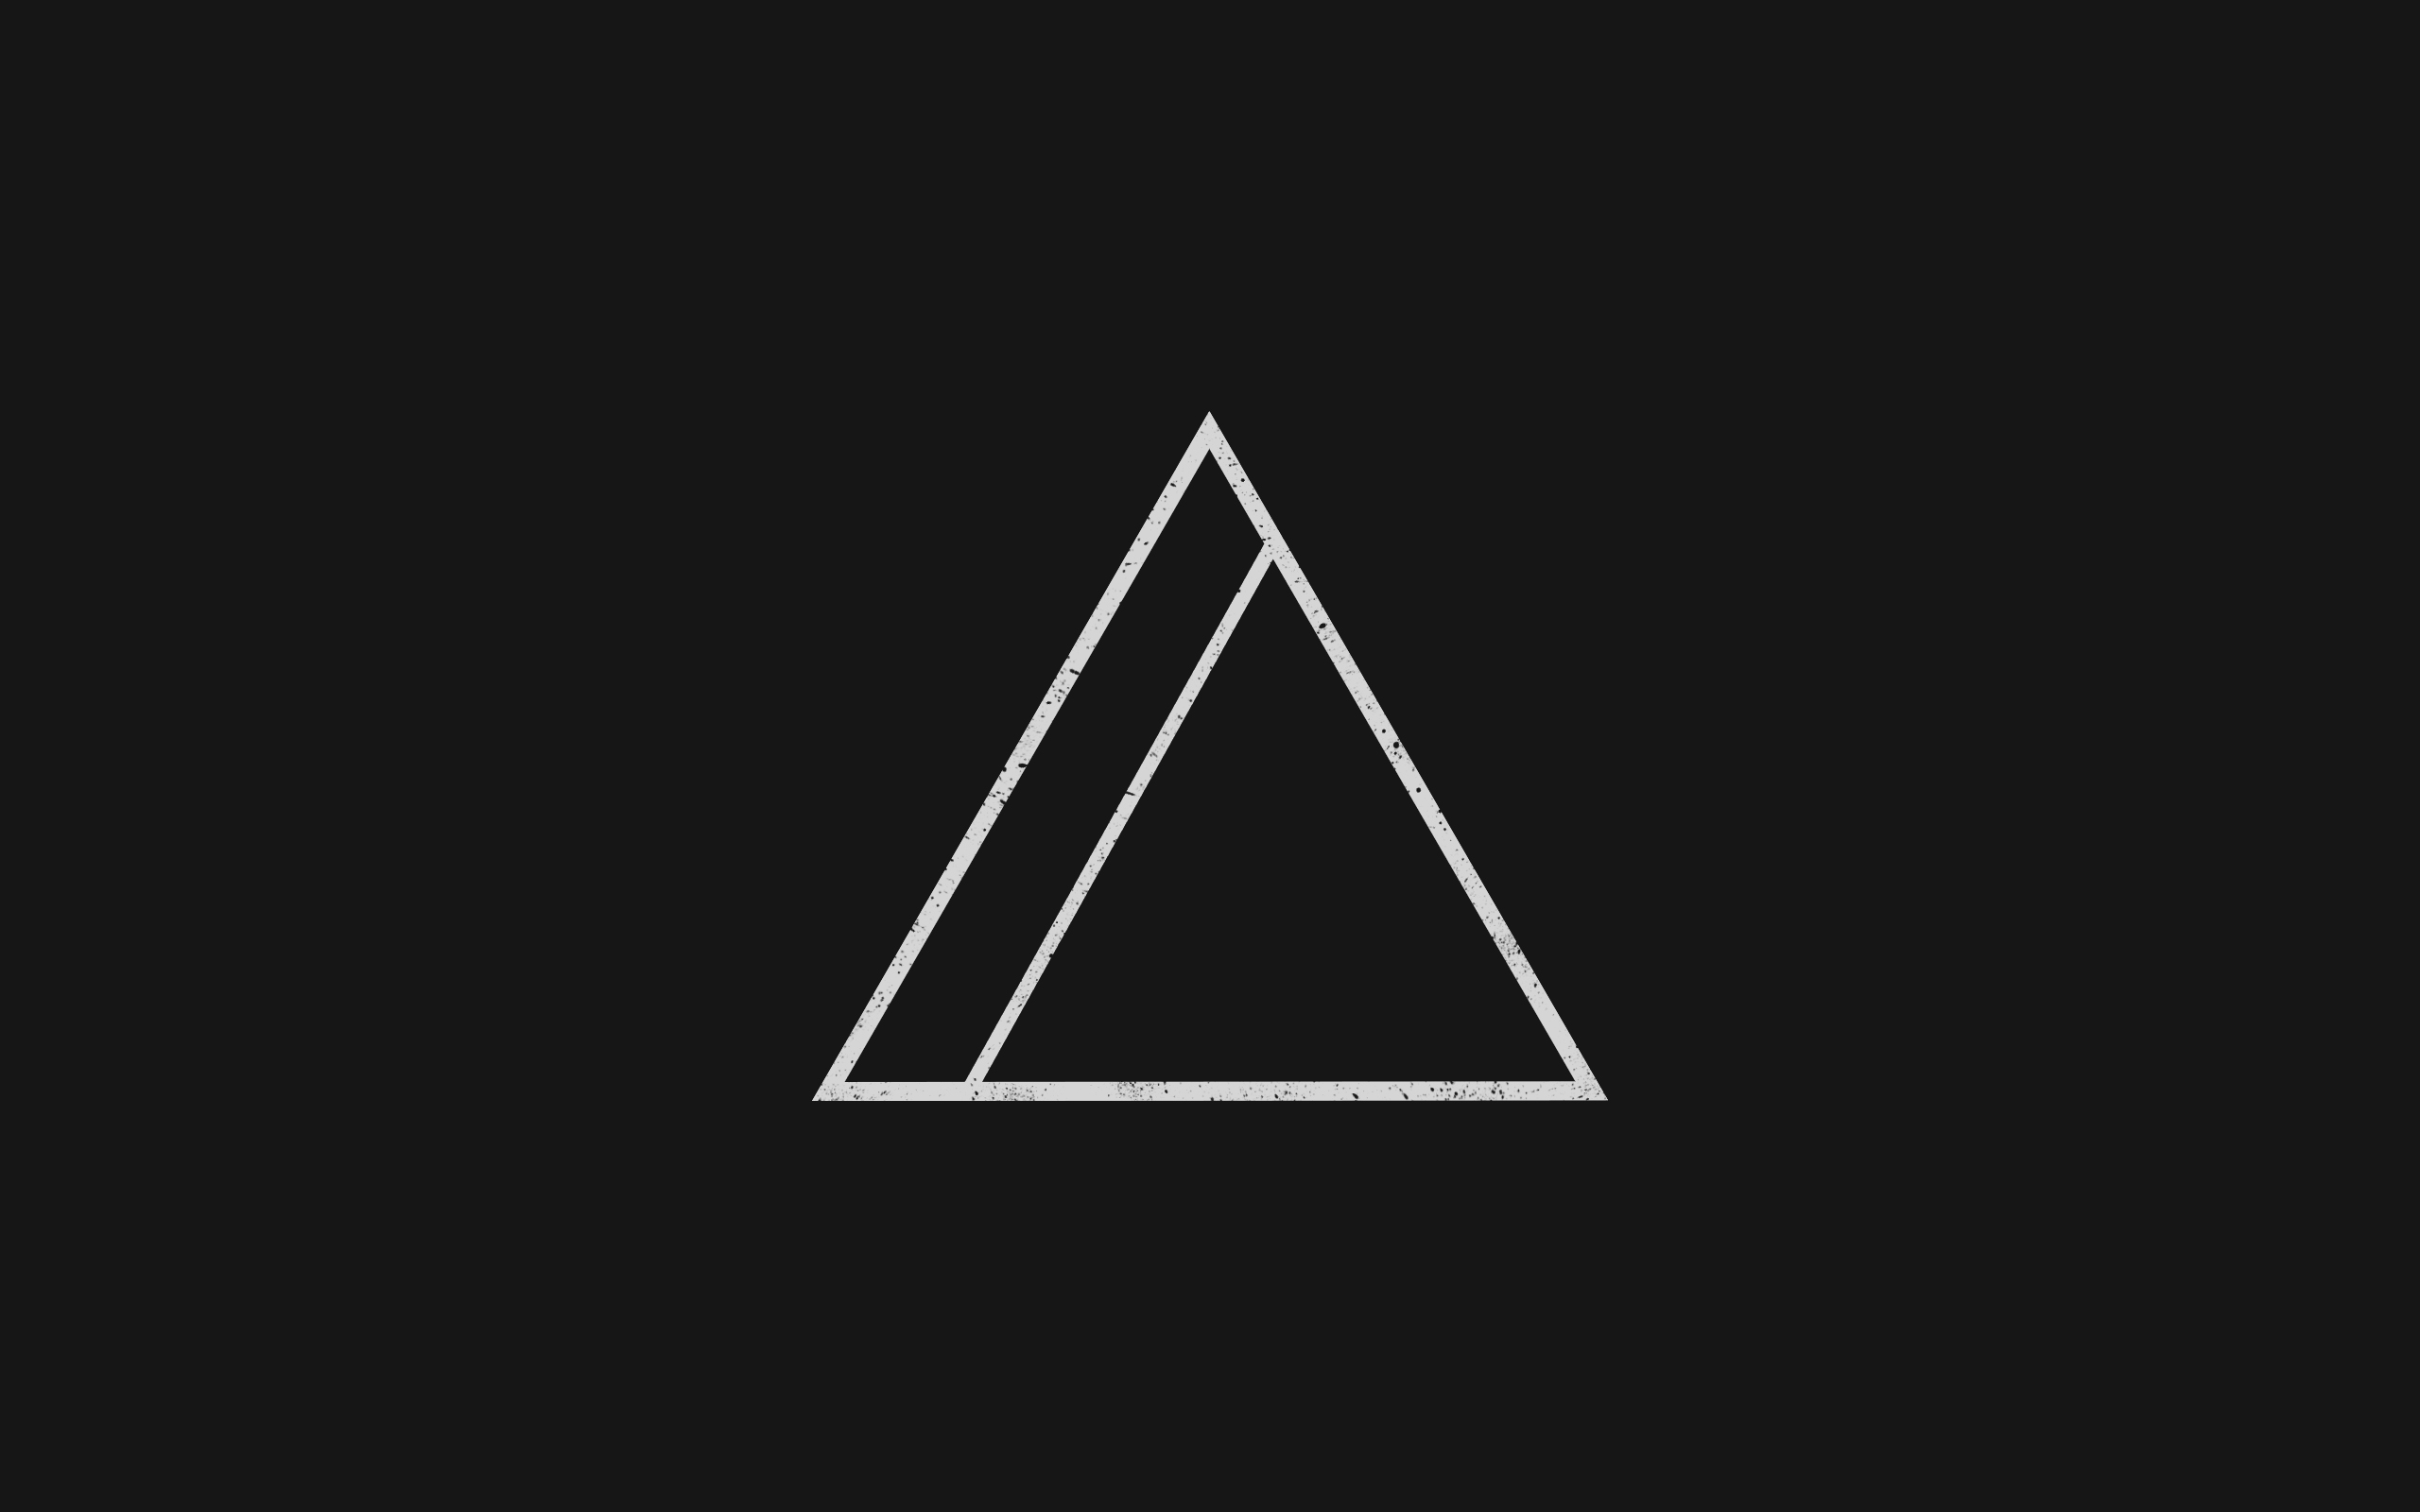 Triangle geometry minimalism black background